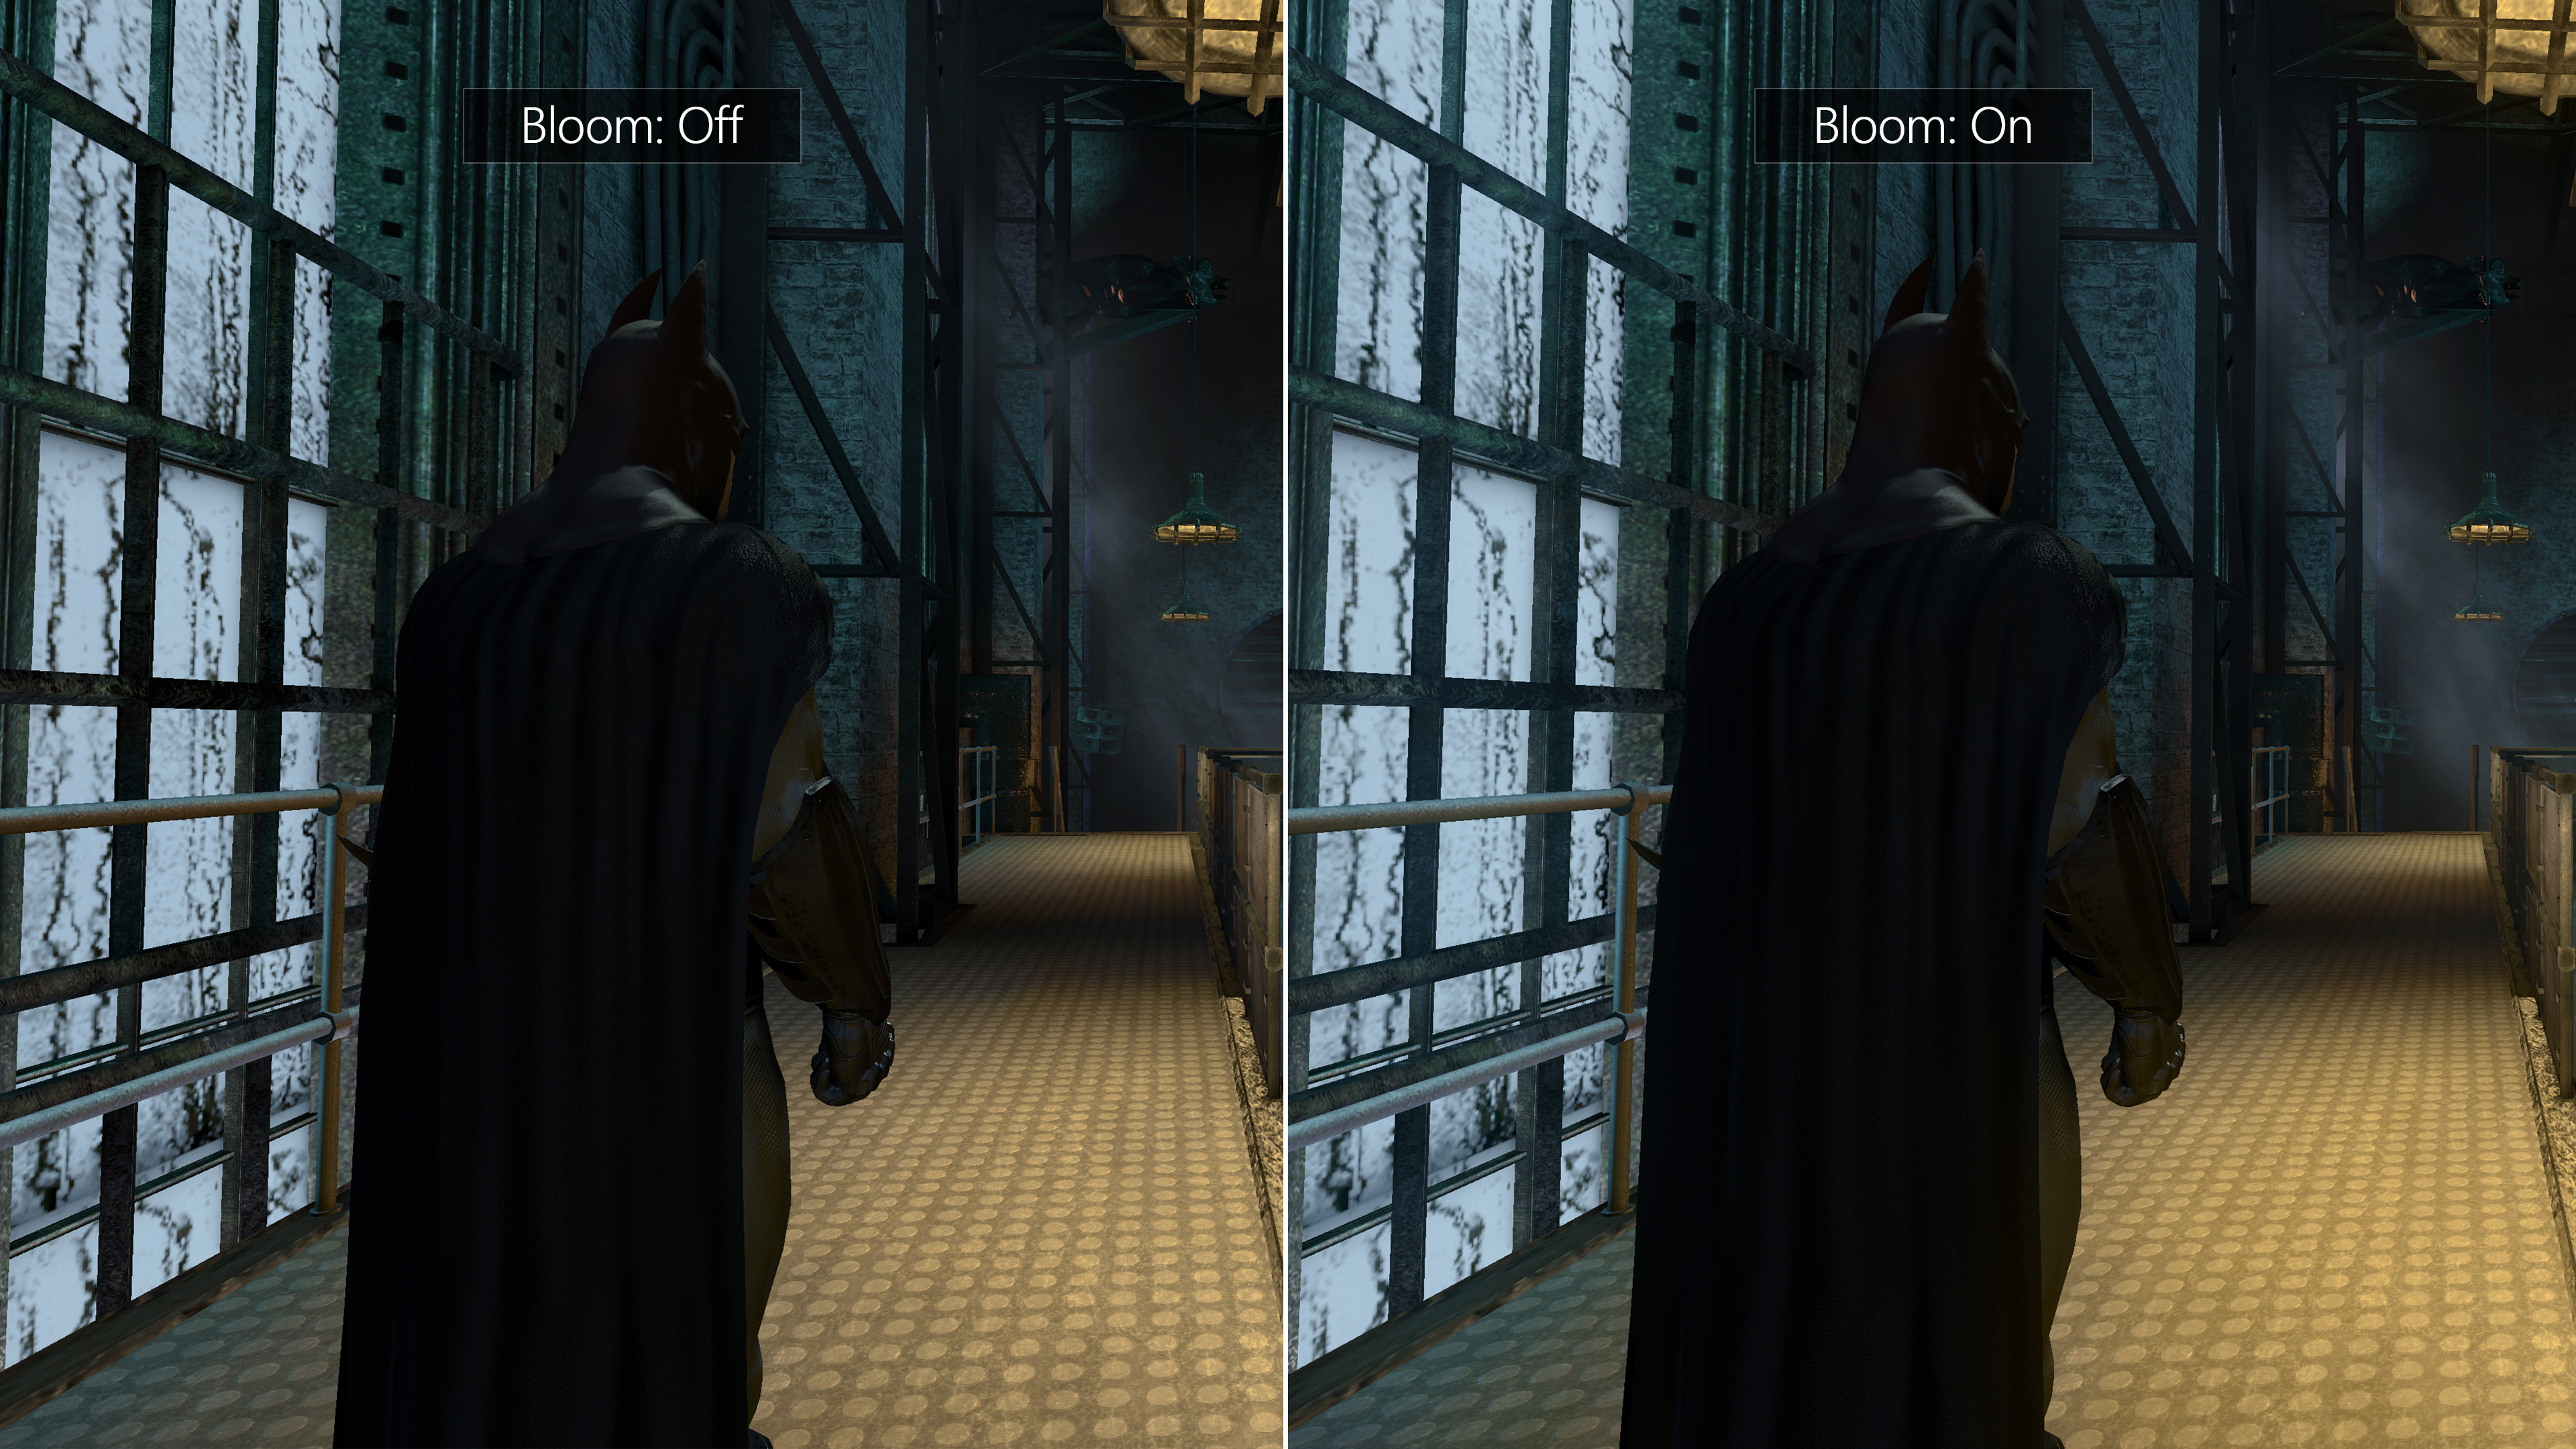 Batman: Arkham Asylum Mod Overhauls the Visuals for HD Quality